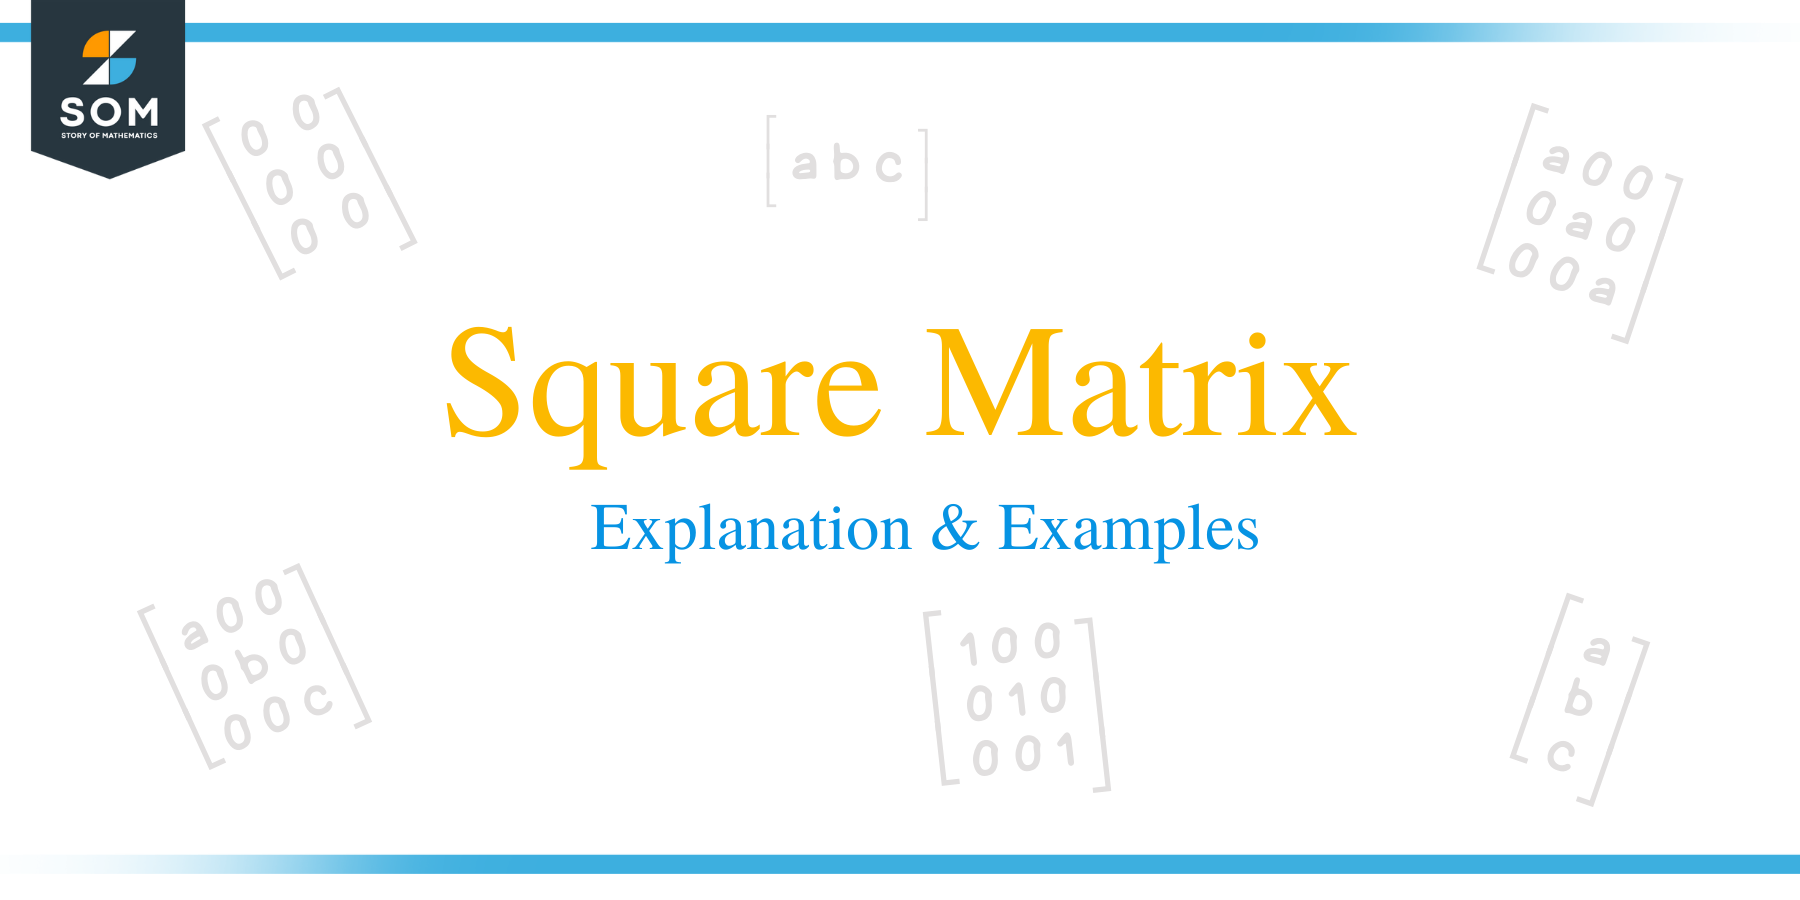 Square Matrix